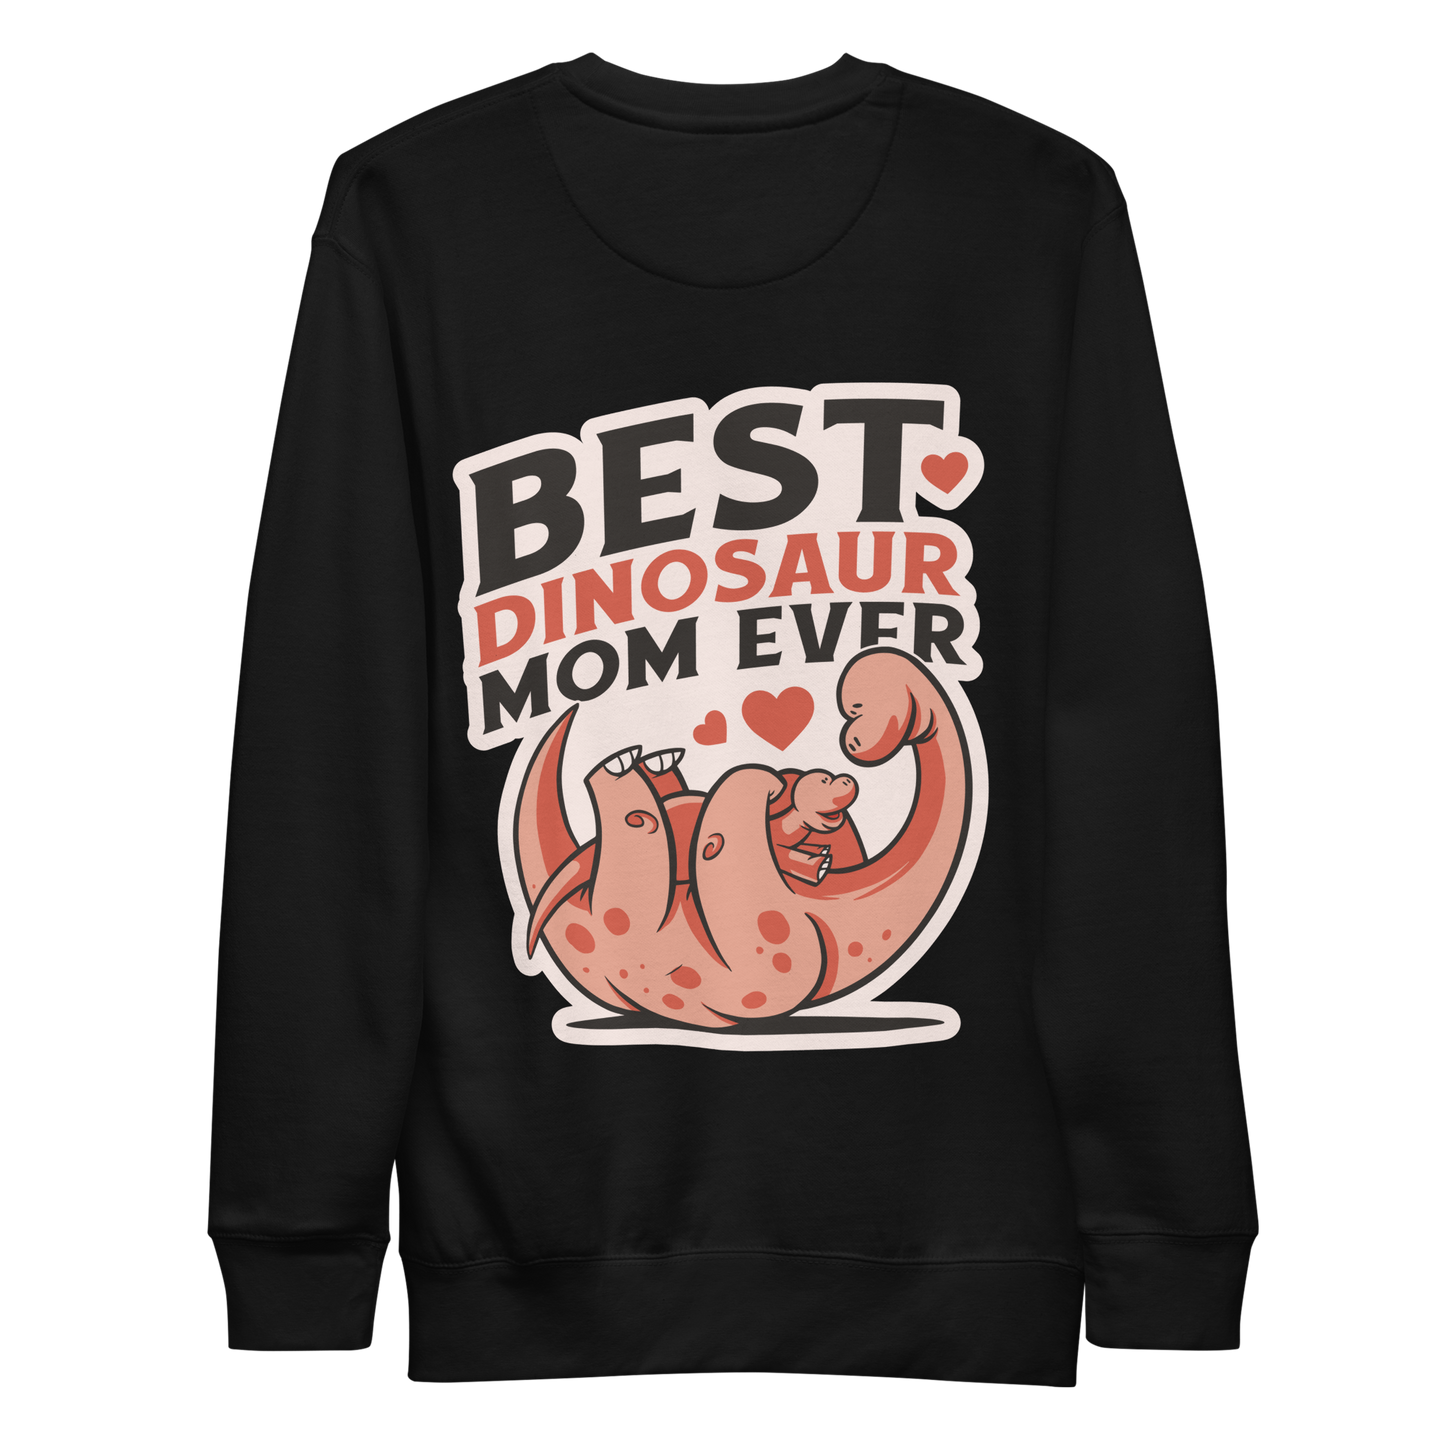 Best dinosaur mom cute | Unisex Premium Sweatshirt - F&B